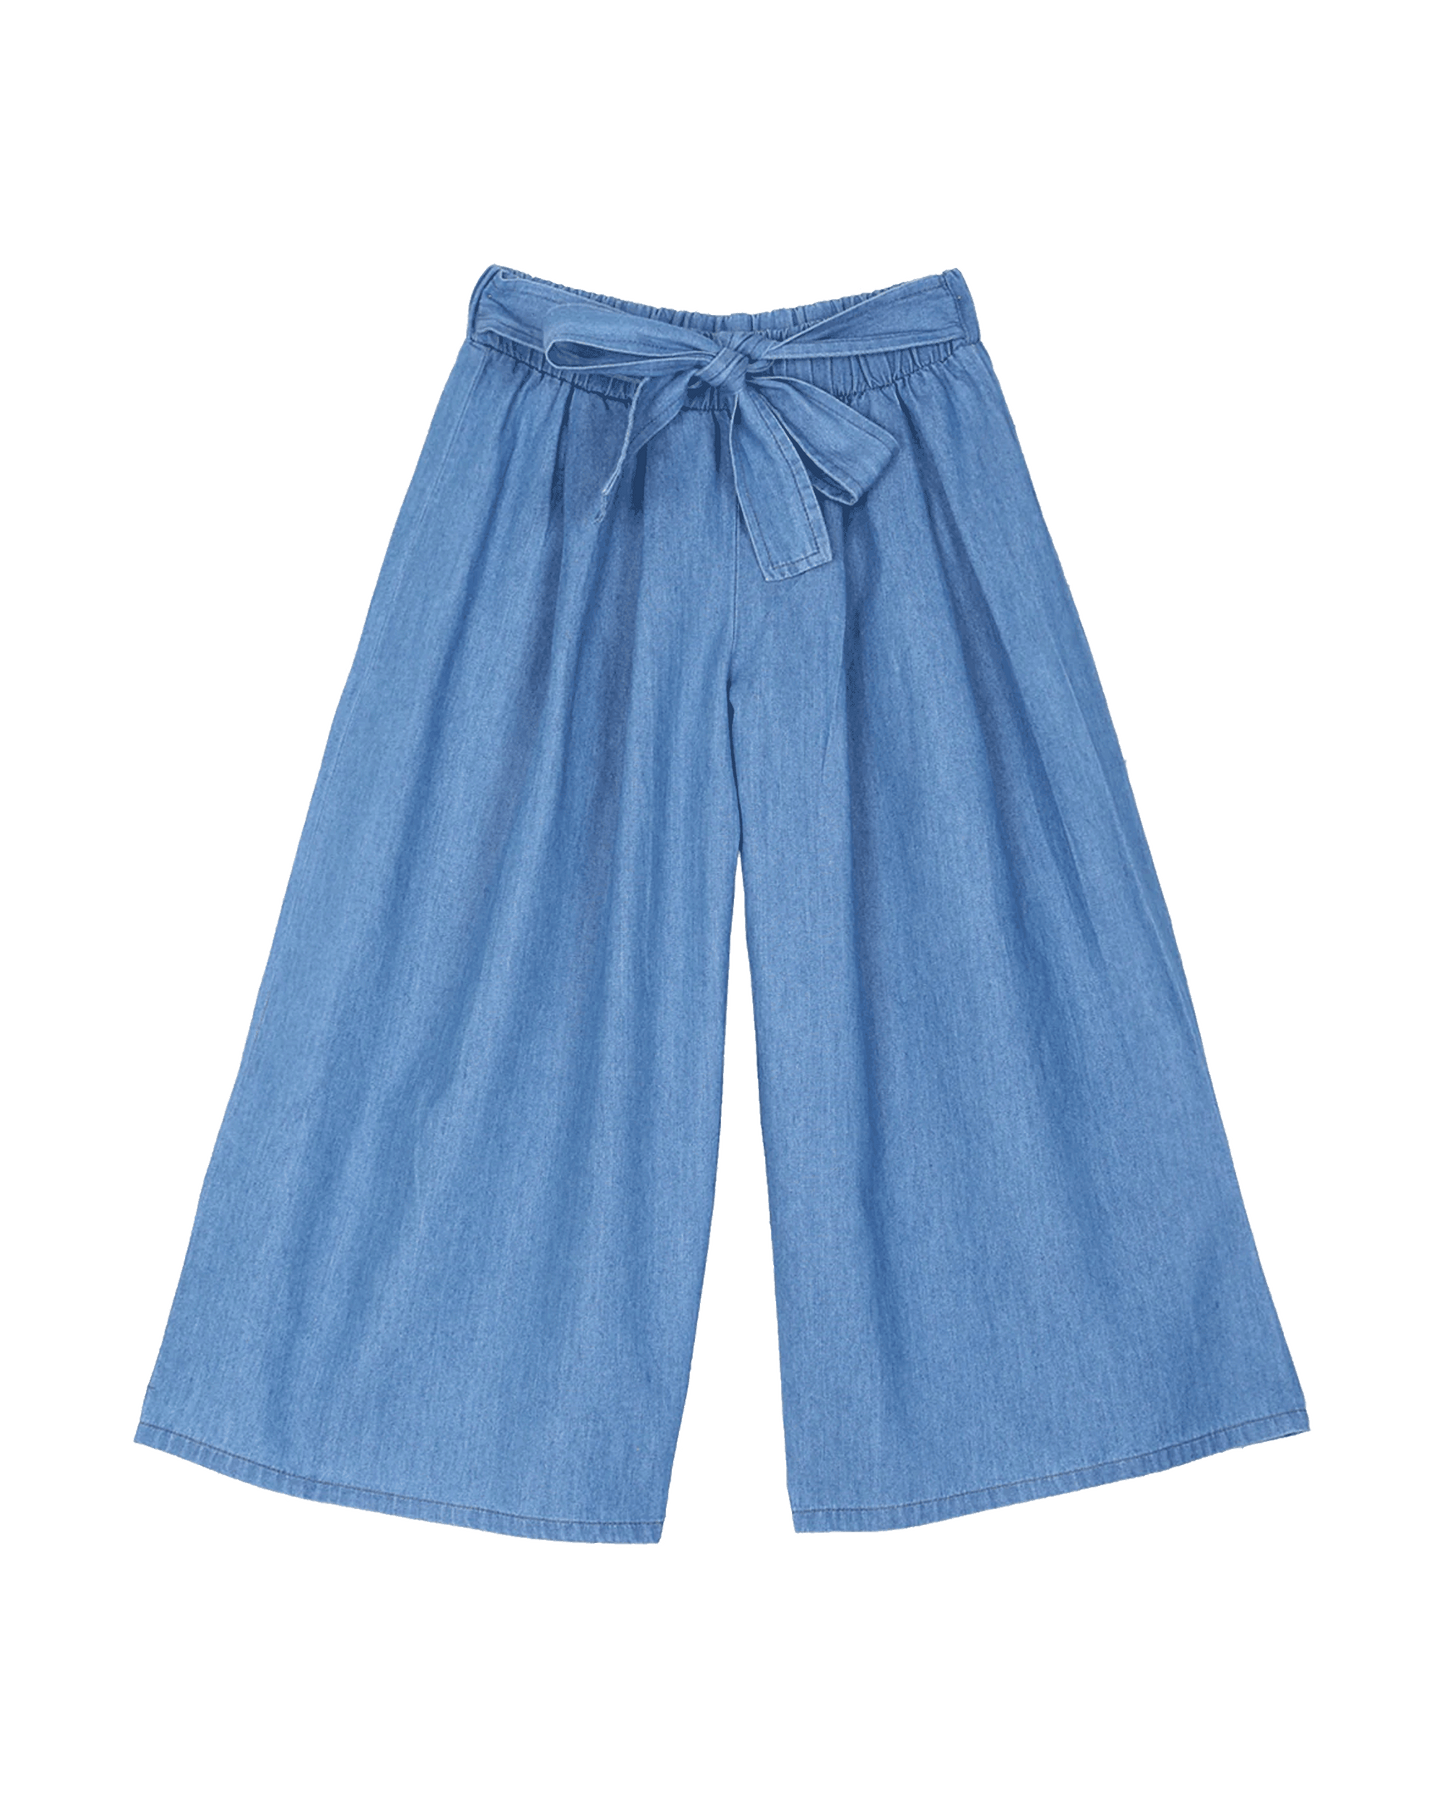 Pantalon noué chambray bleu clair